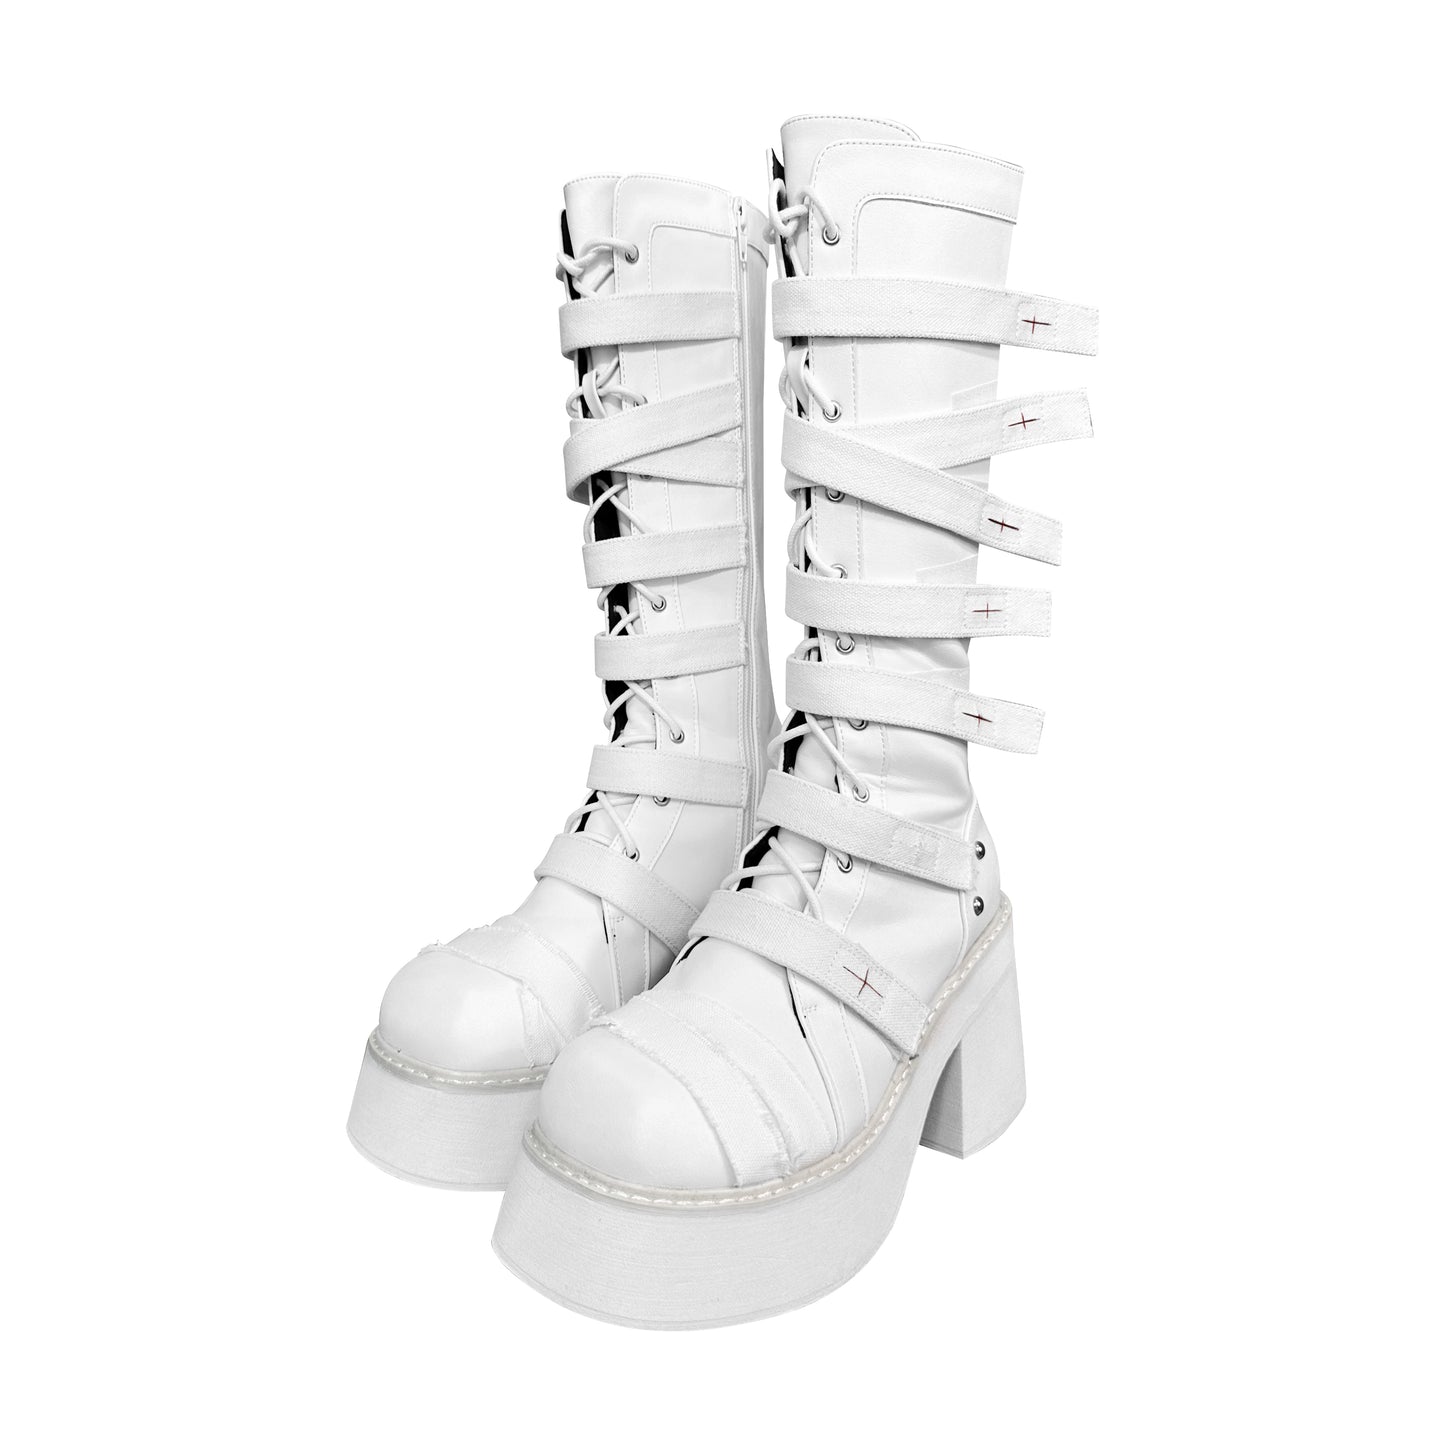 Punk Combat Boots Cross Strap Black White Boots (34 35 36 37 38 39 40 / White) 33822:446144